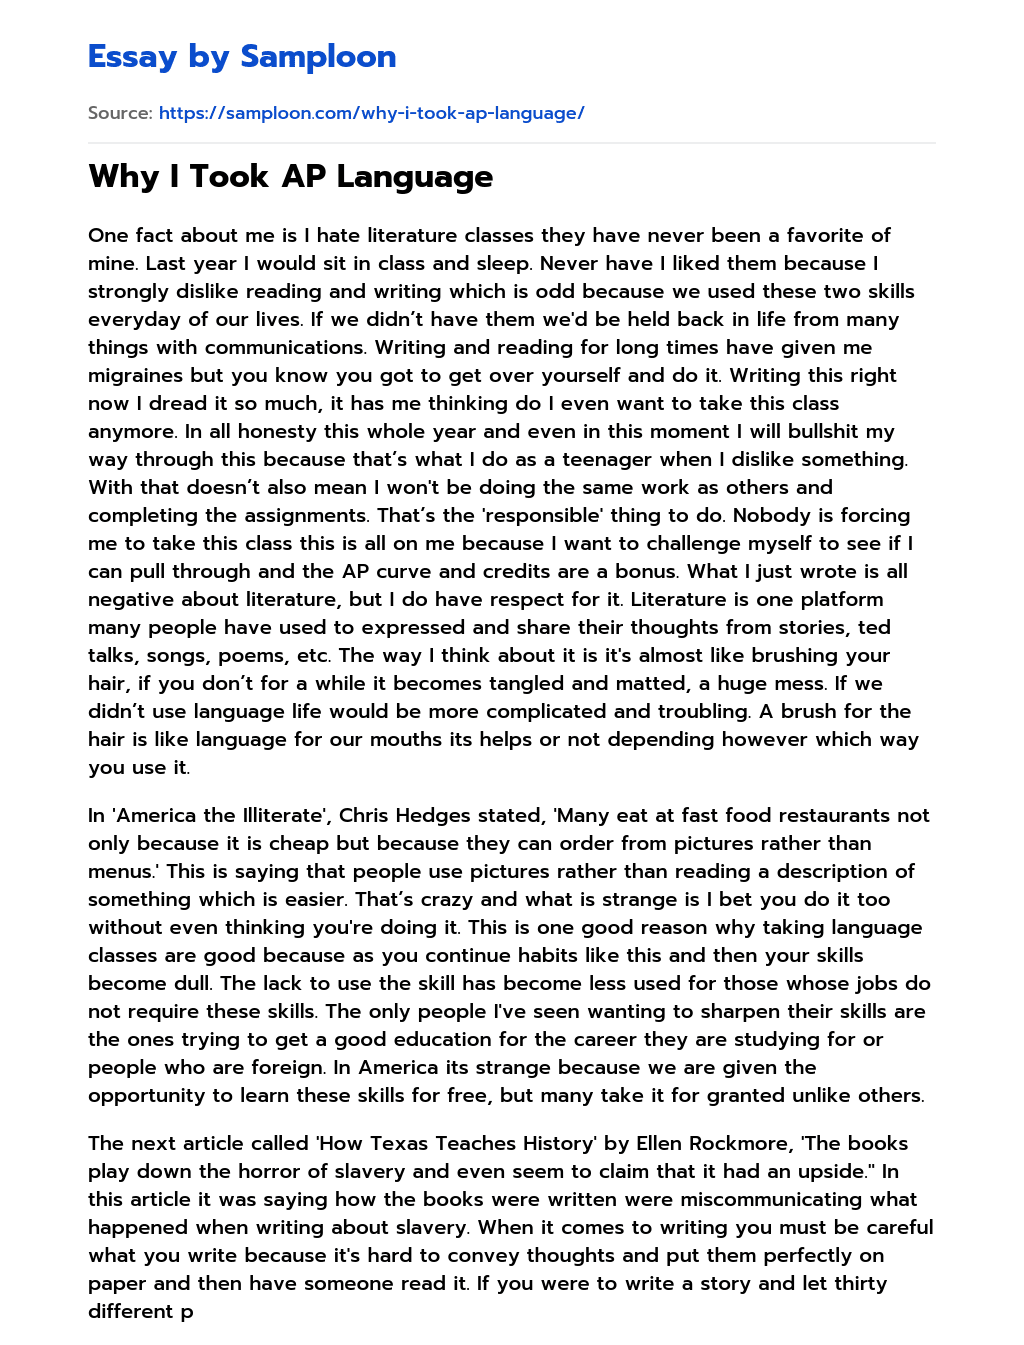 Why I Took AP Language essay